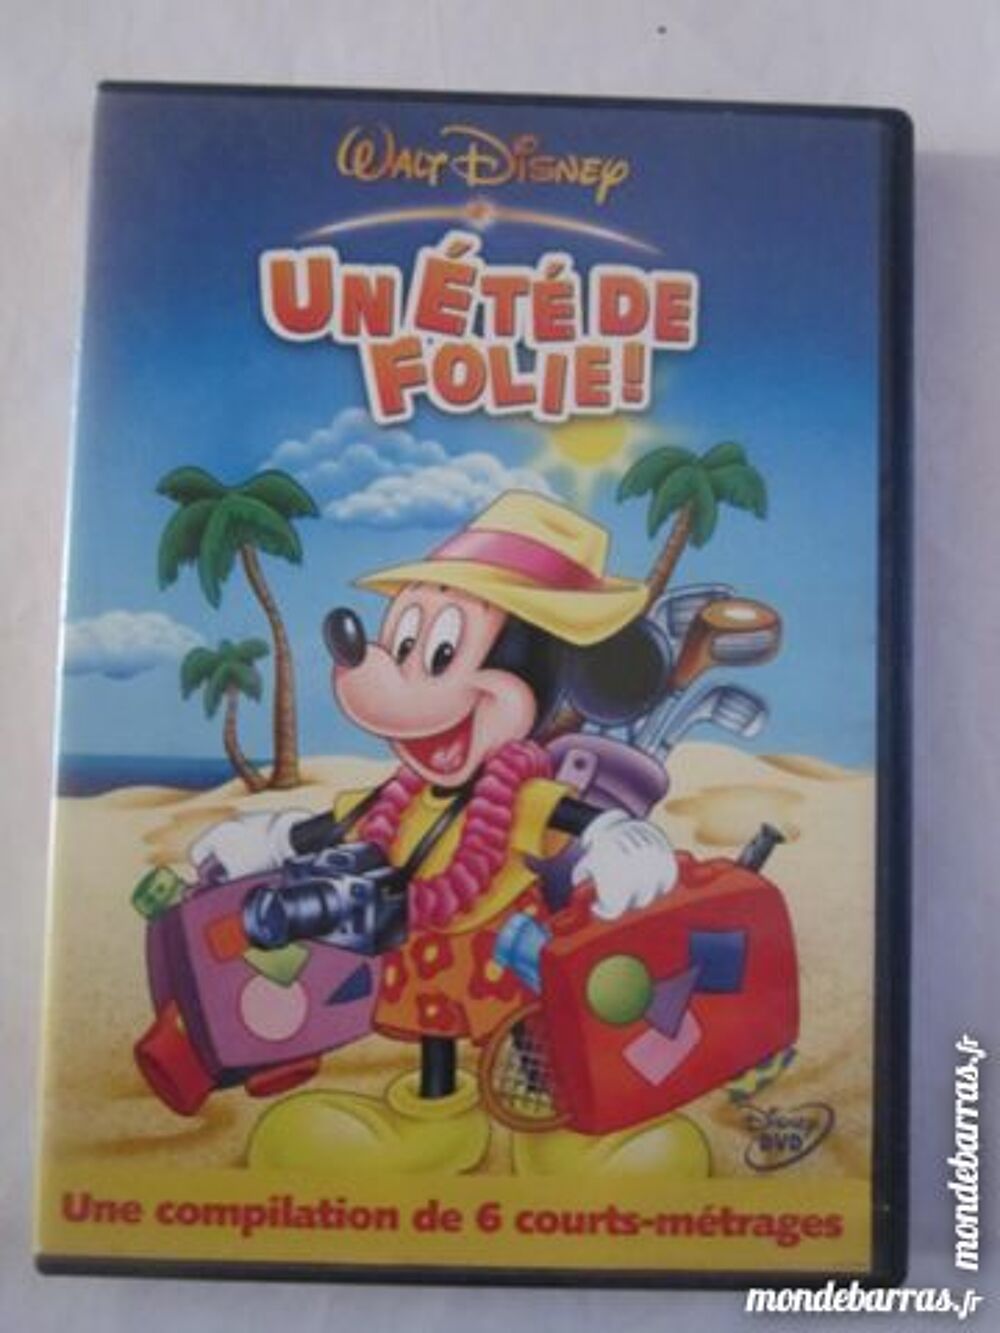 DVD DISNEY - UN ETE DE FOLIE ( mickey ) DVD et blu-ray